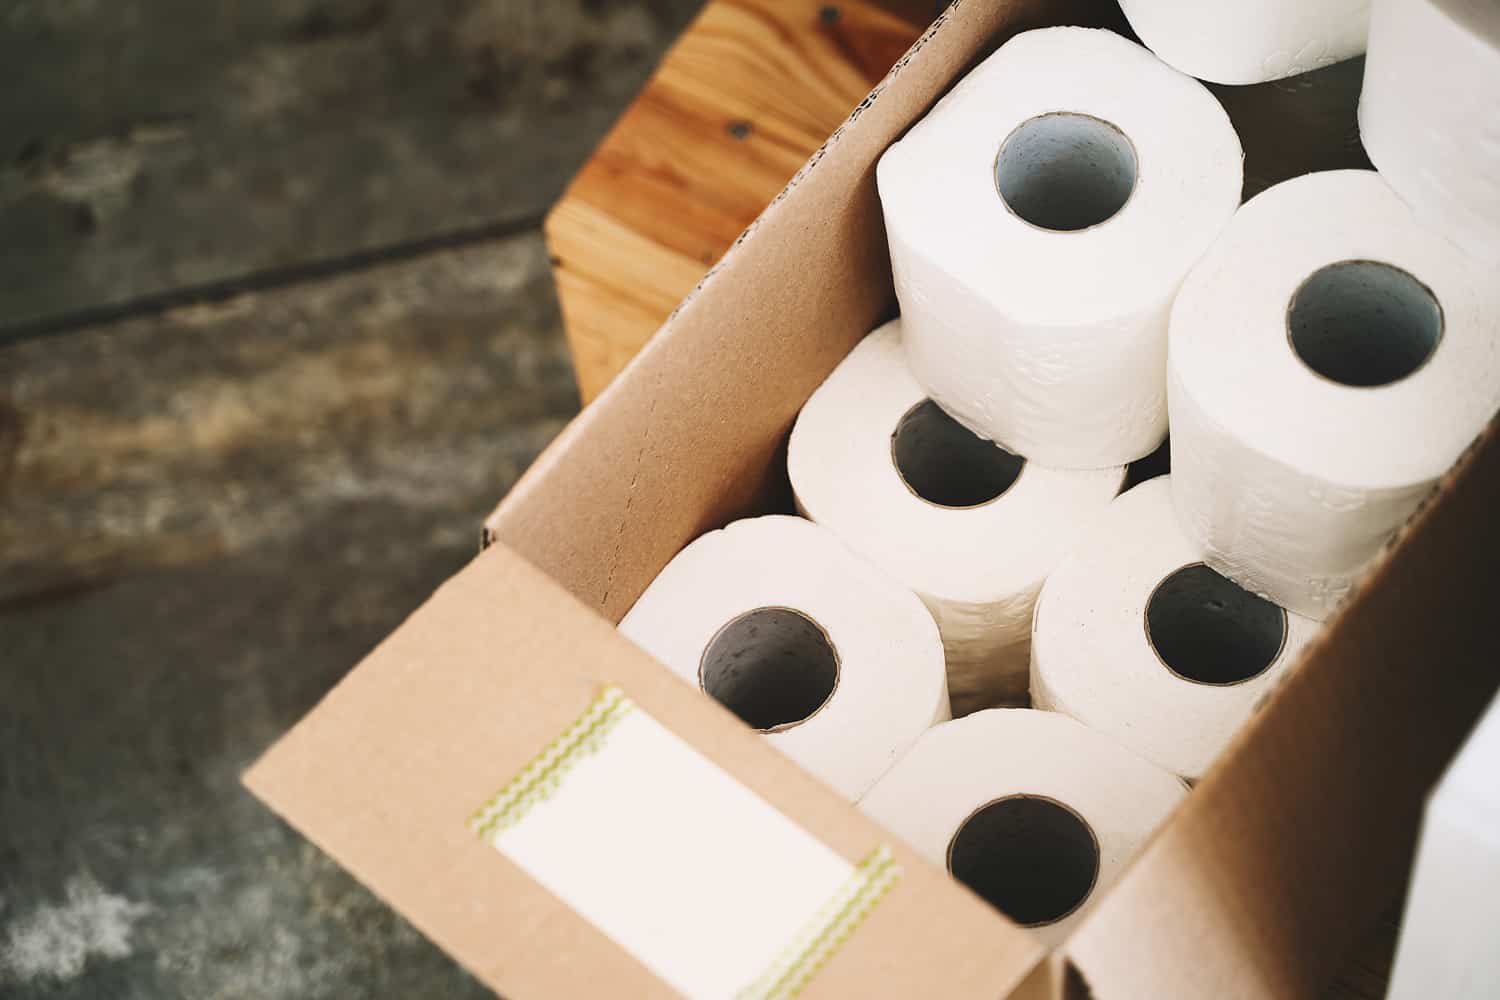 Toilet paper in carton craft box in plastic free store.